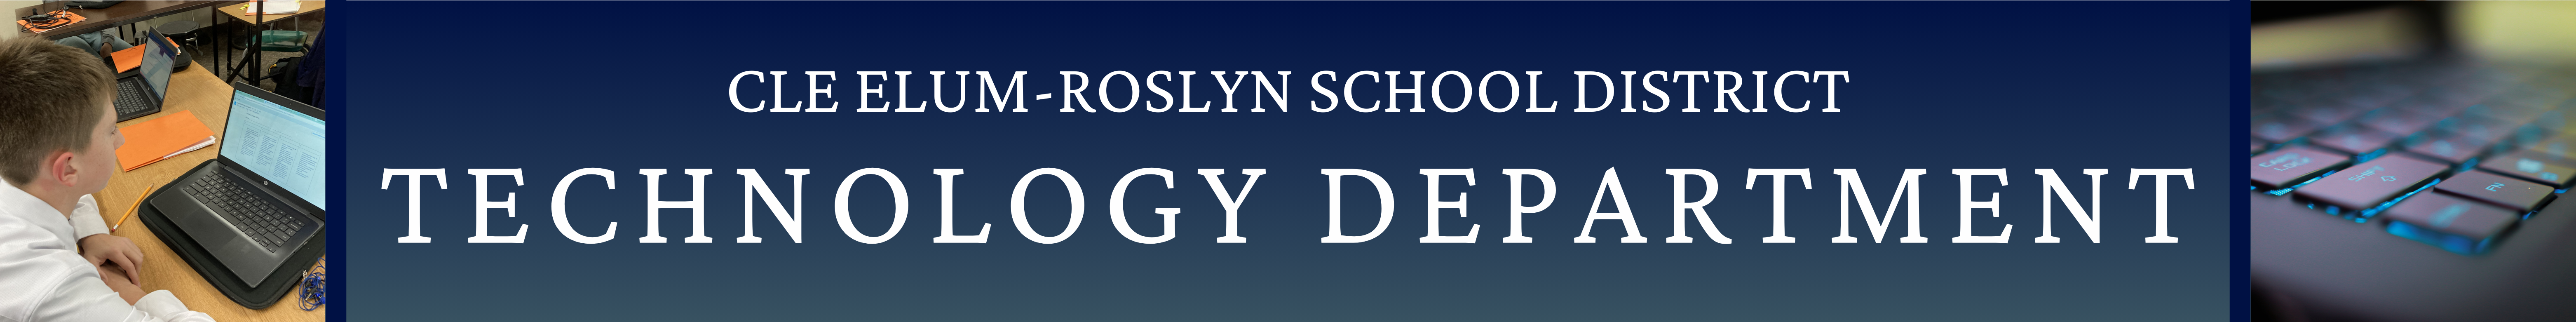 Cle Elum-Roslyn School District Technology Department